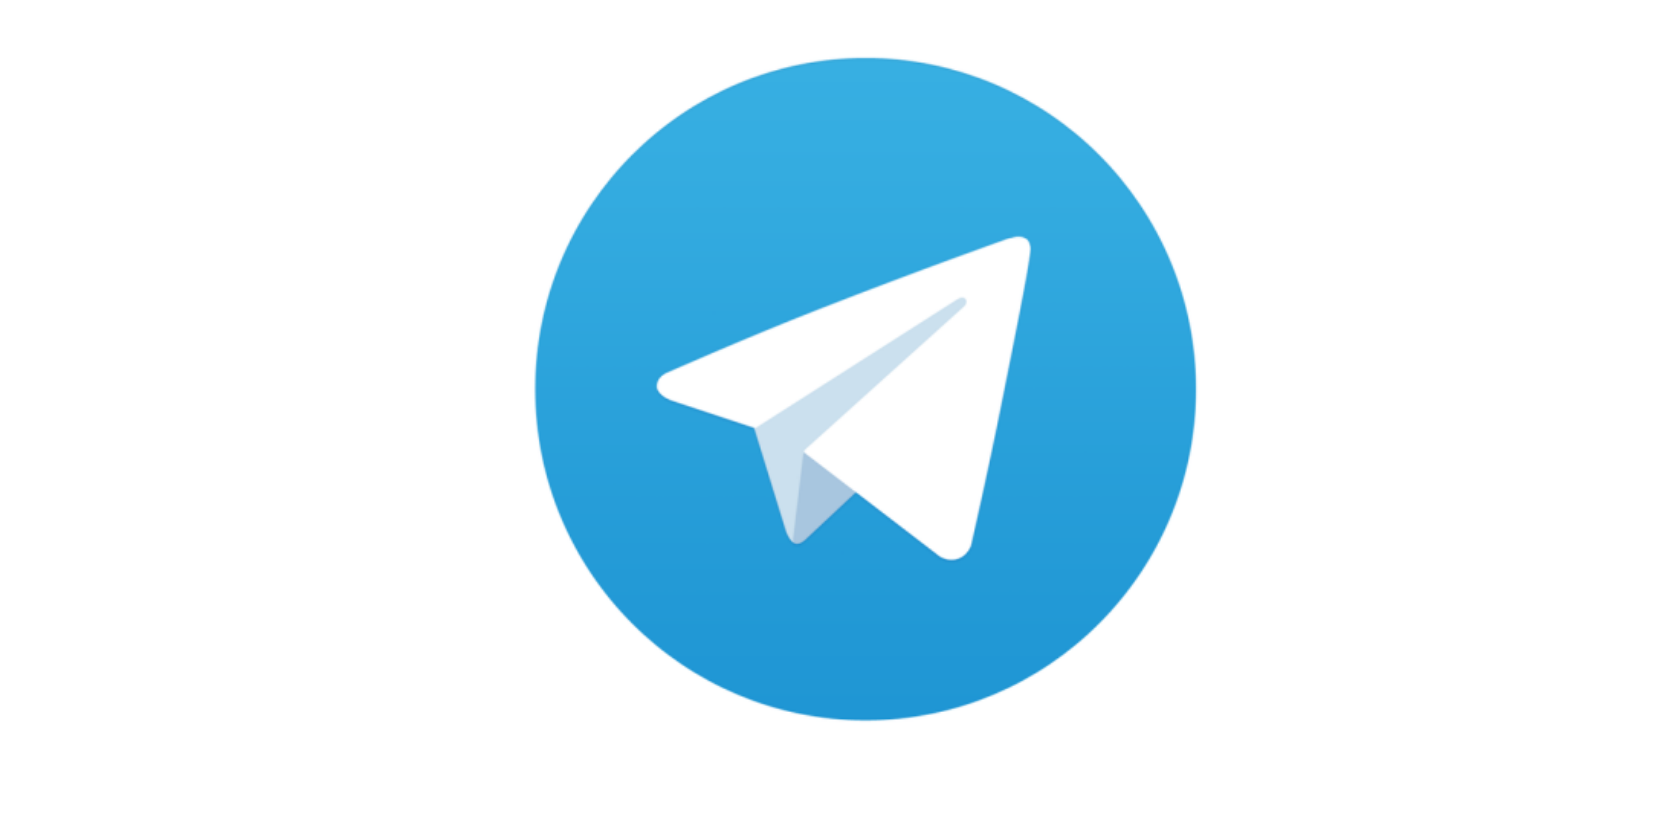 telegram messenger safe